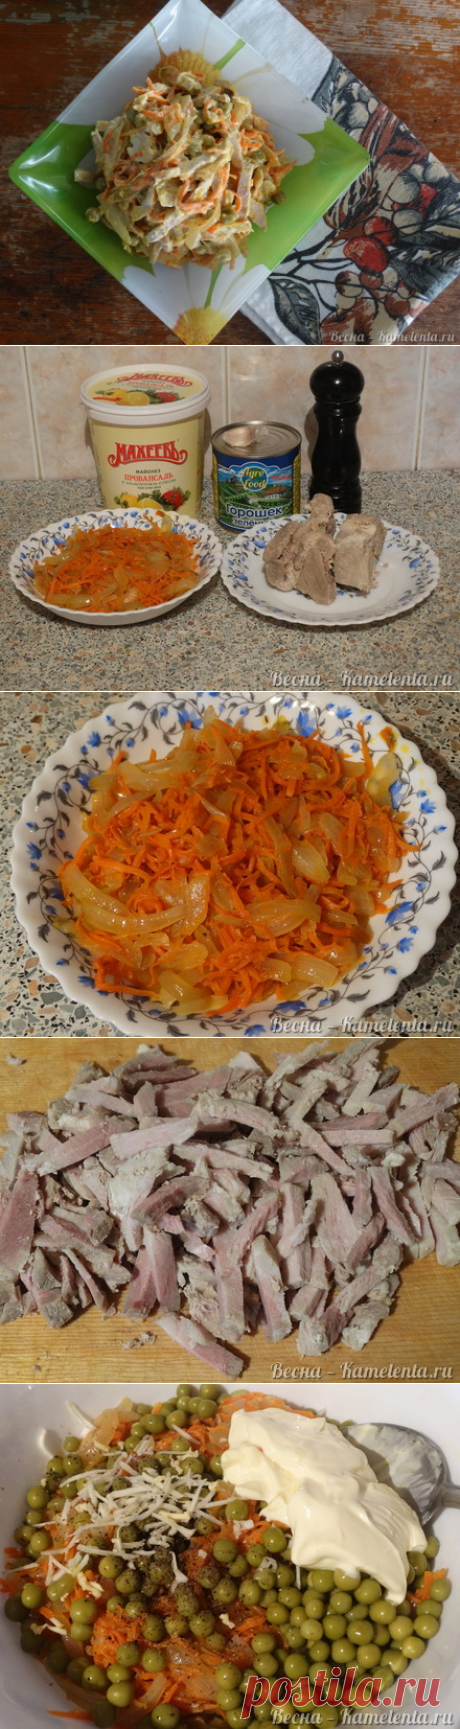 Салат "Обжорка", рецепт с фото салата "Обжорка" со свининой и горошком